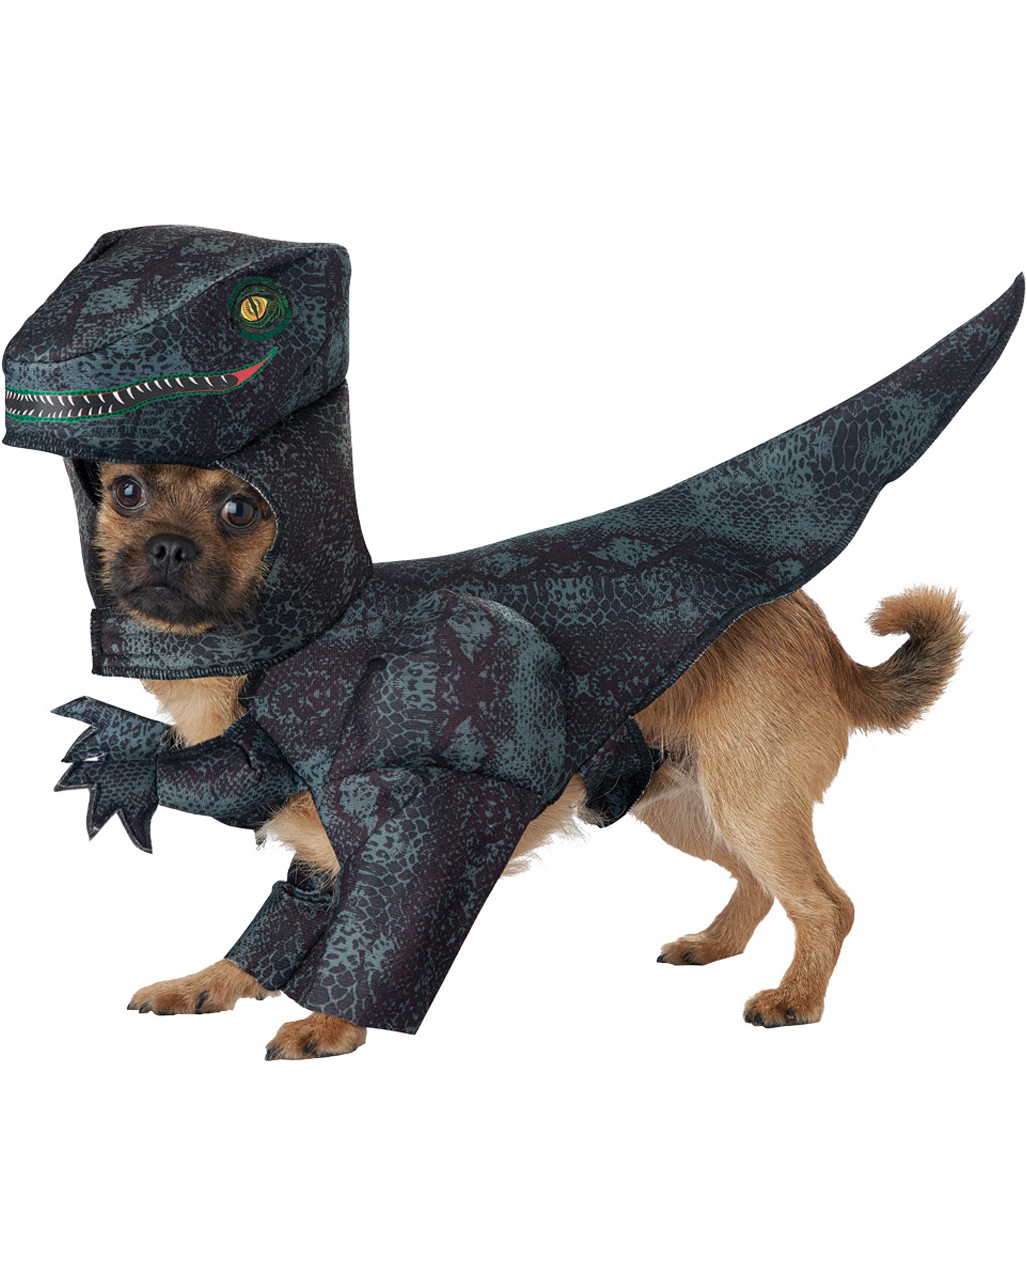 Dinosaur Costume Dog guise | Horror-Shop.com